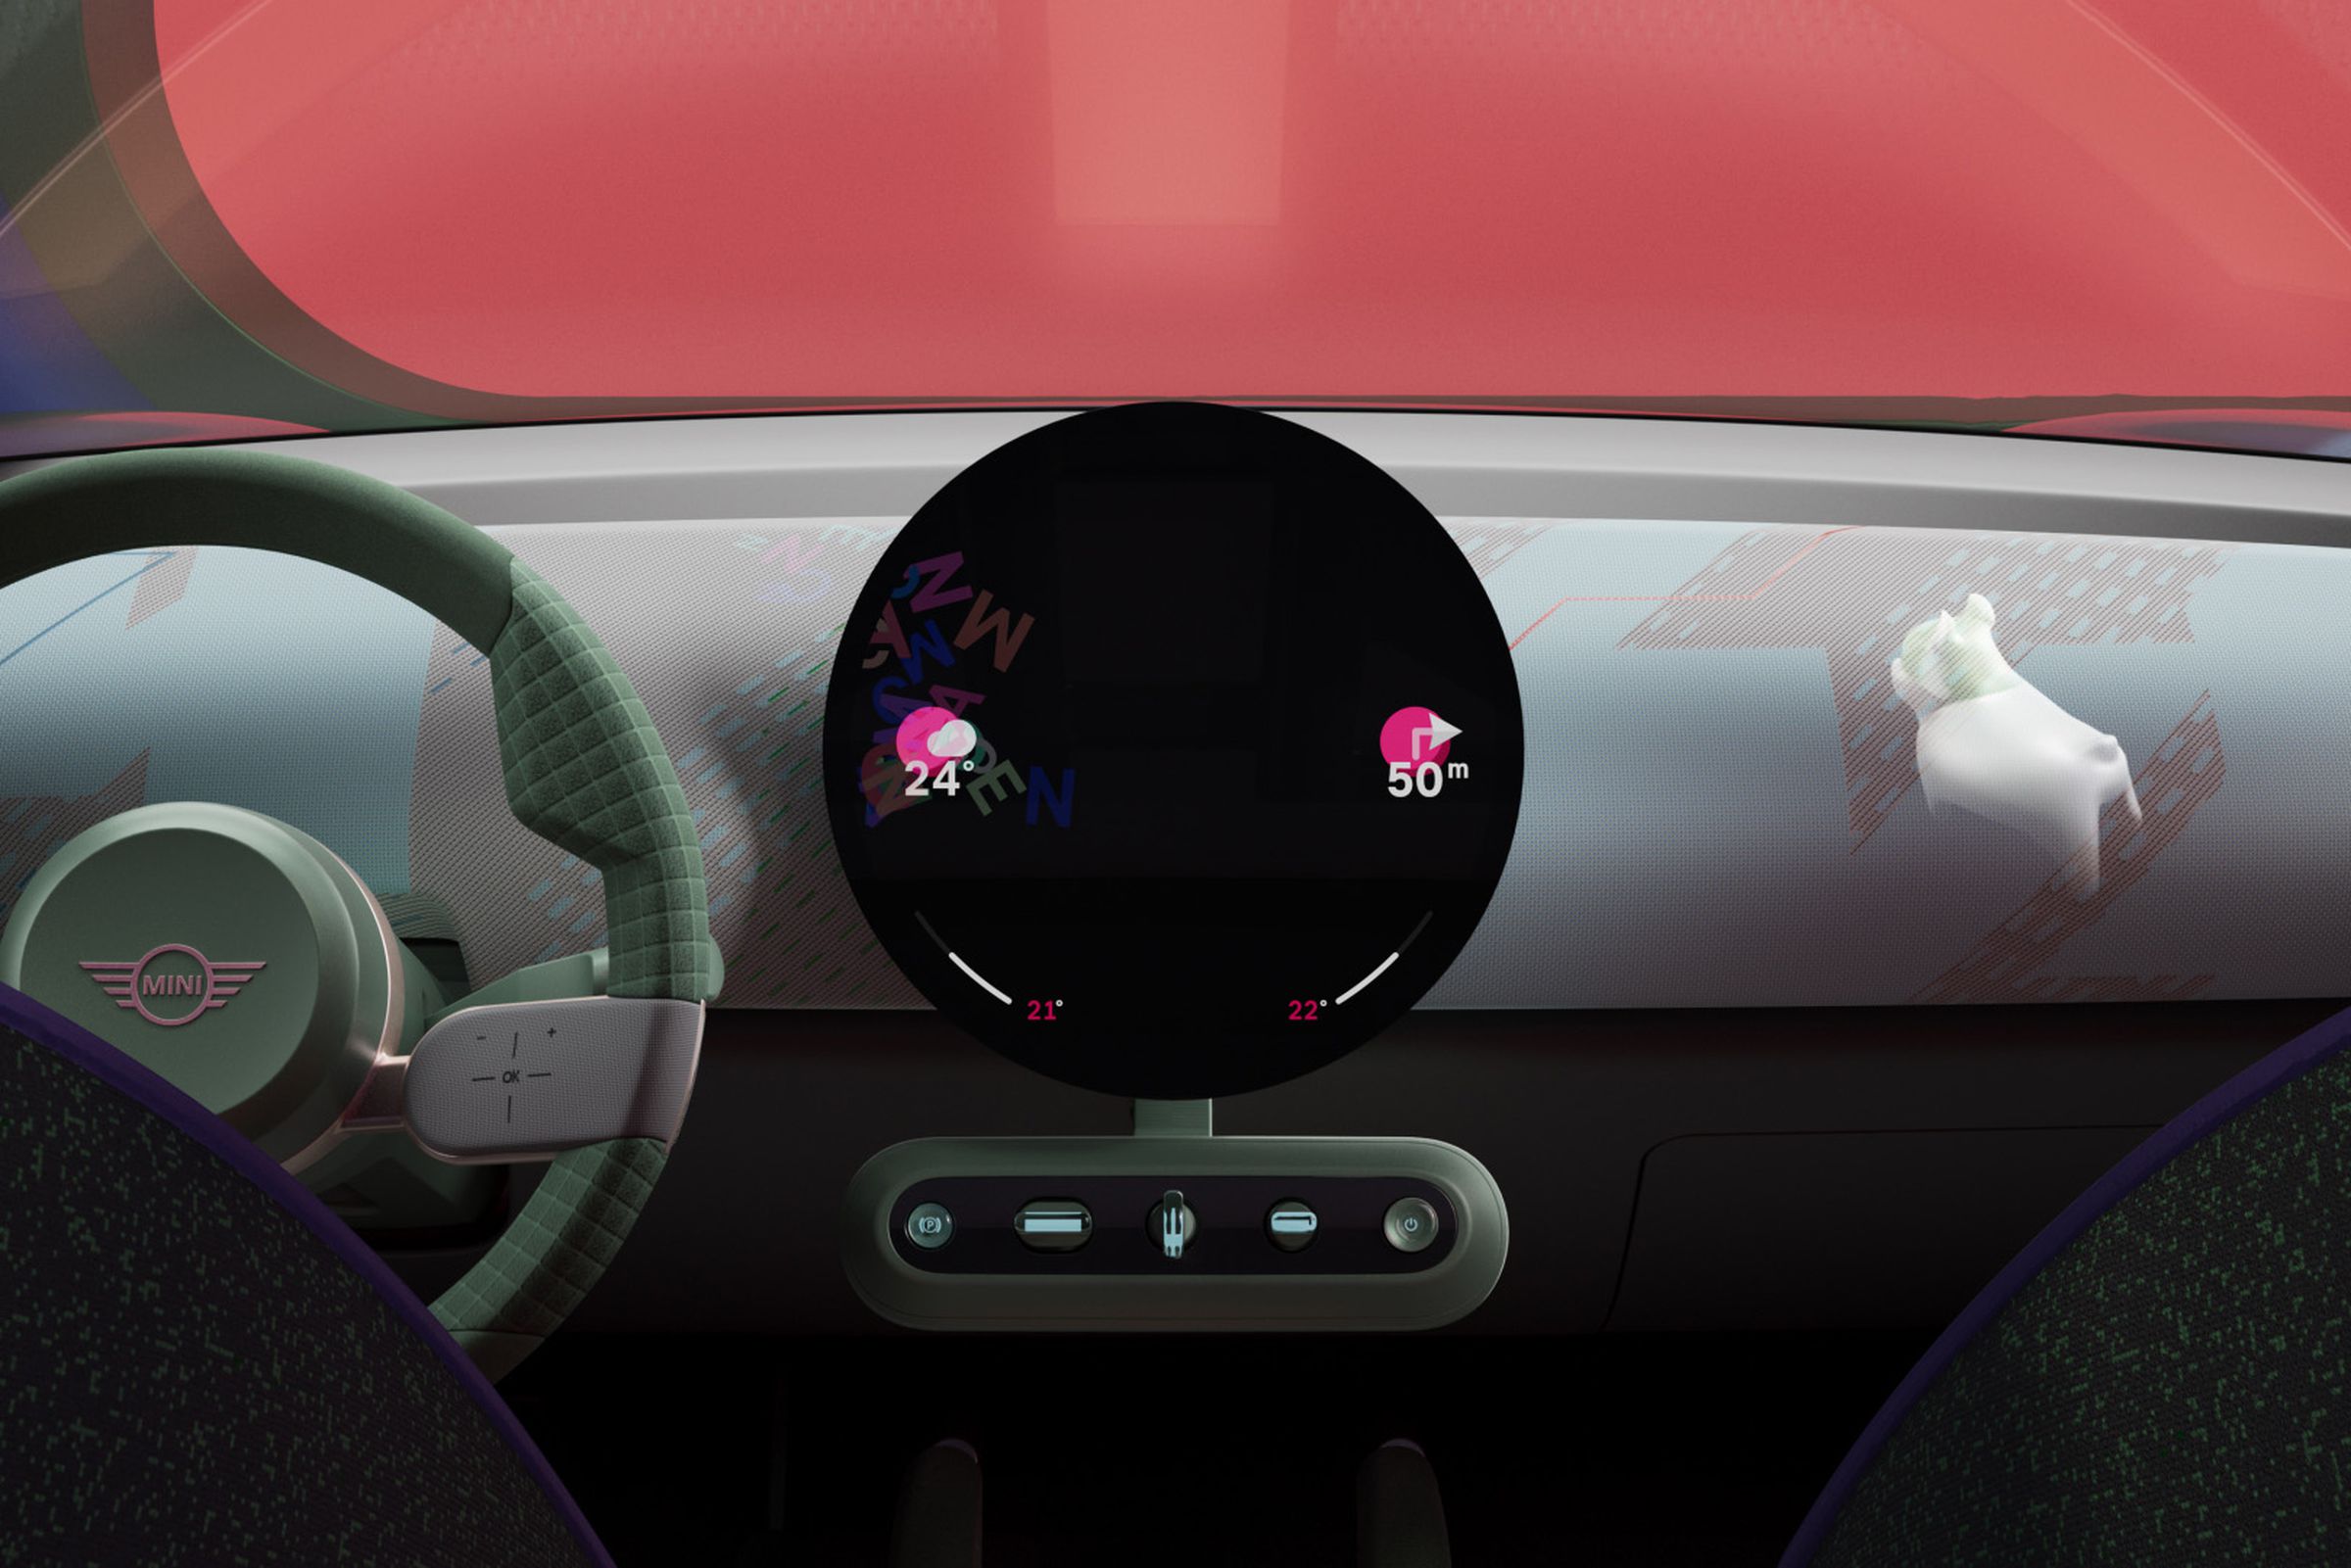 Spike appears on car dashboard display.